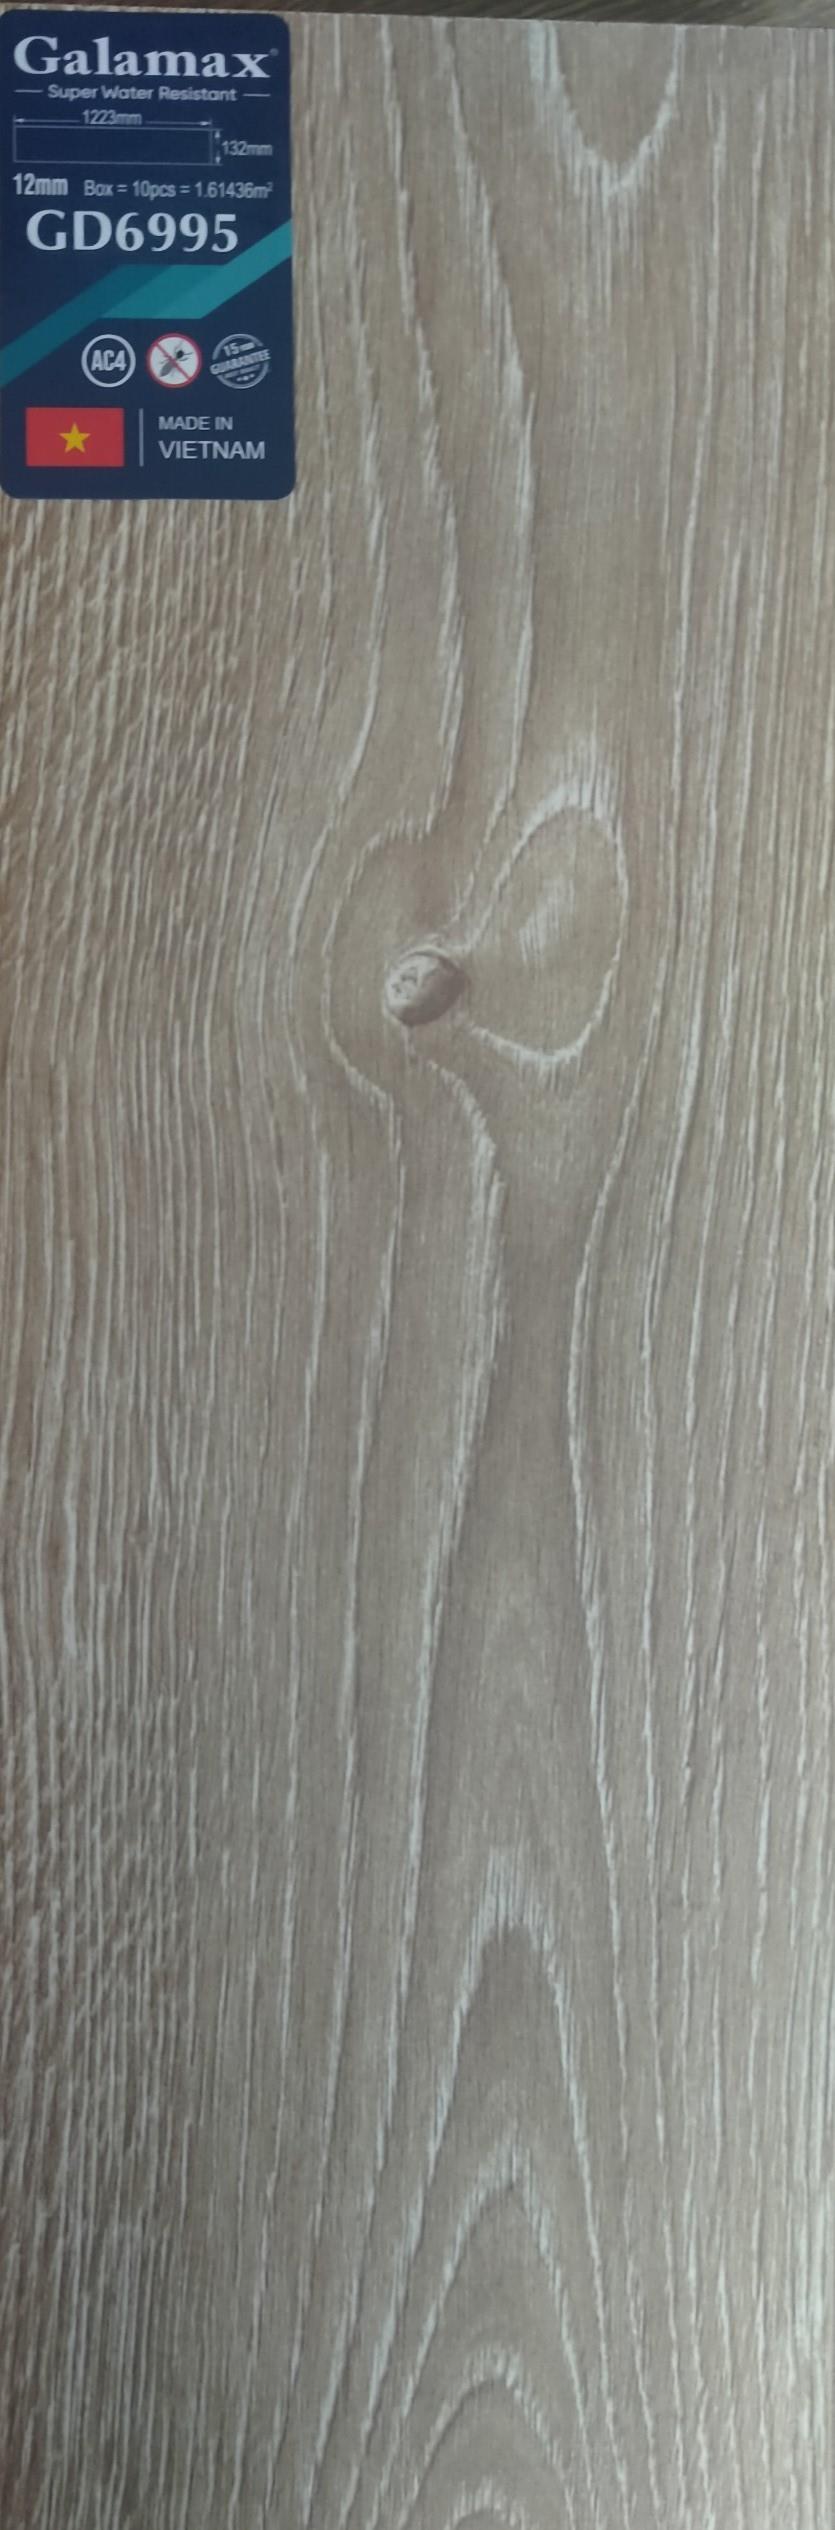 Sàn gỗ Galamax GD6995